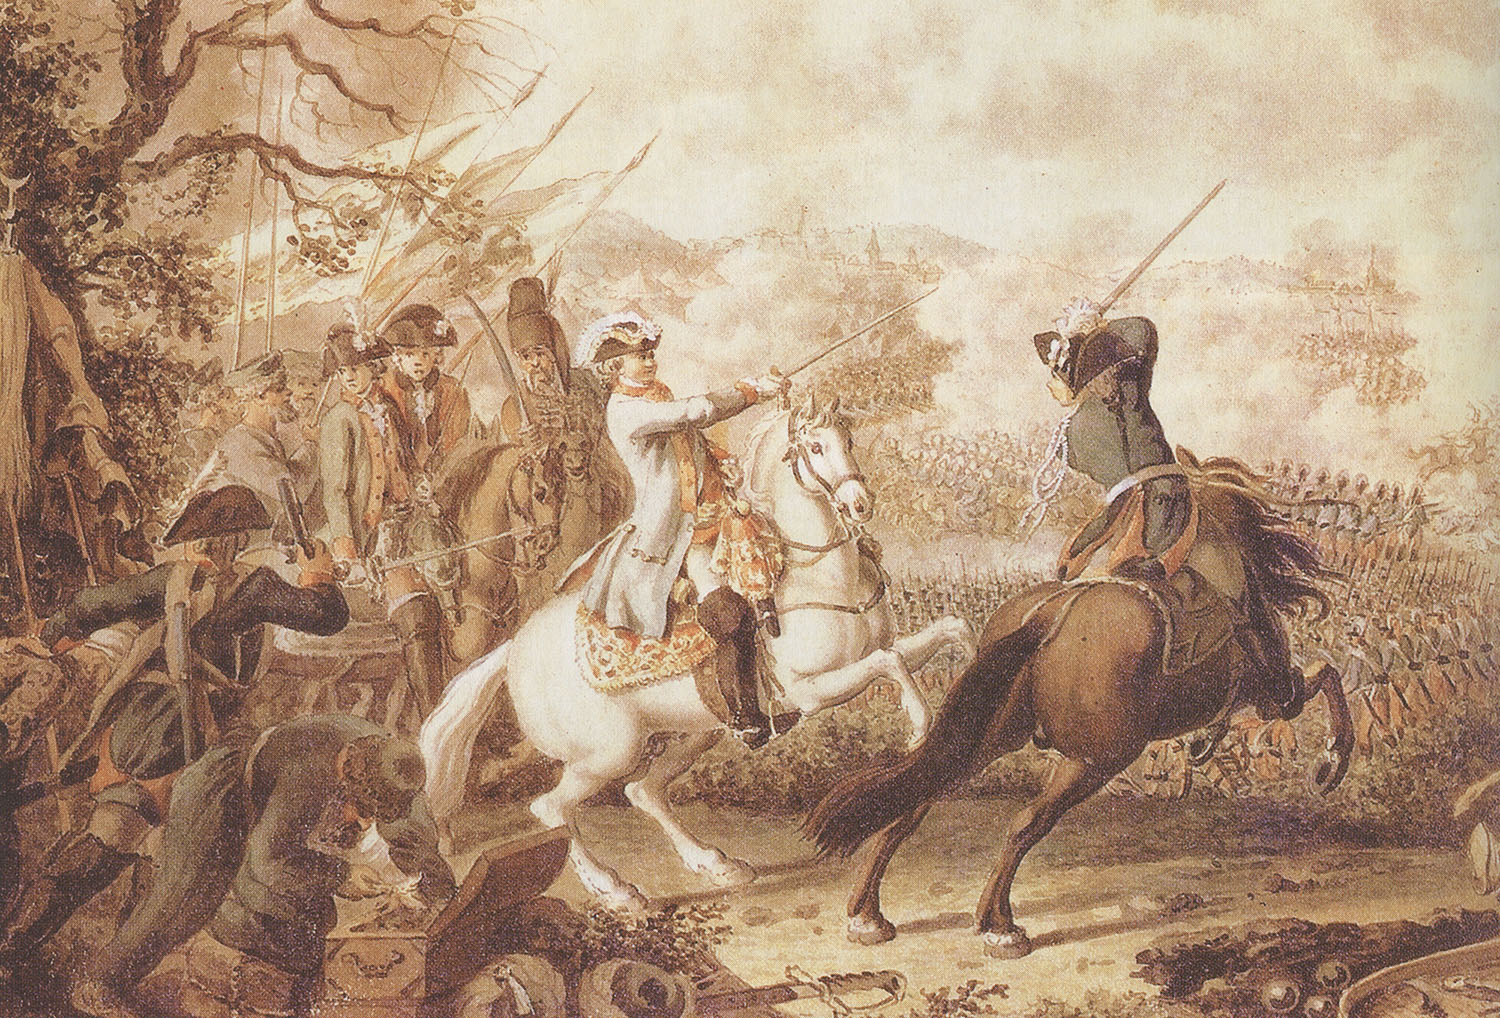 Д. Ходовецкий. "Сражение при Кагуле 21 июля (1 августа) 1770 года". 1770-е.